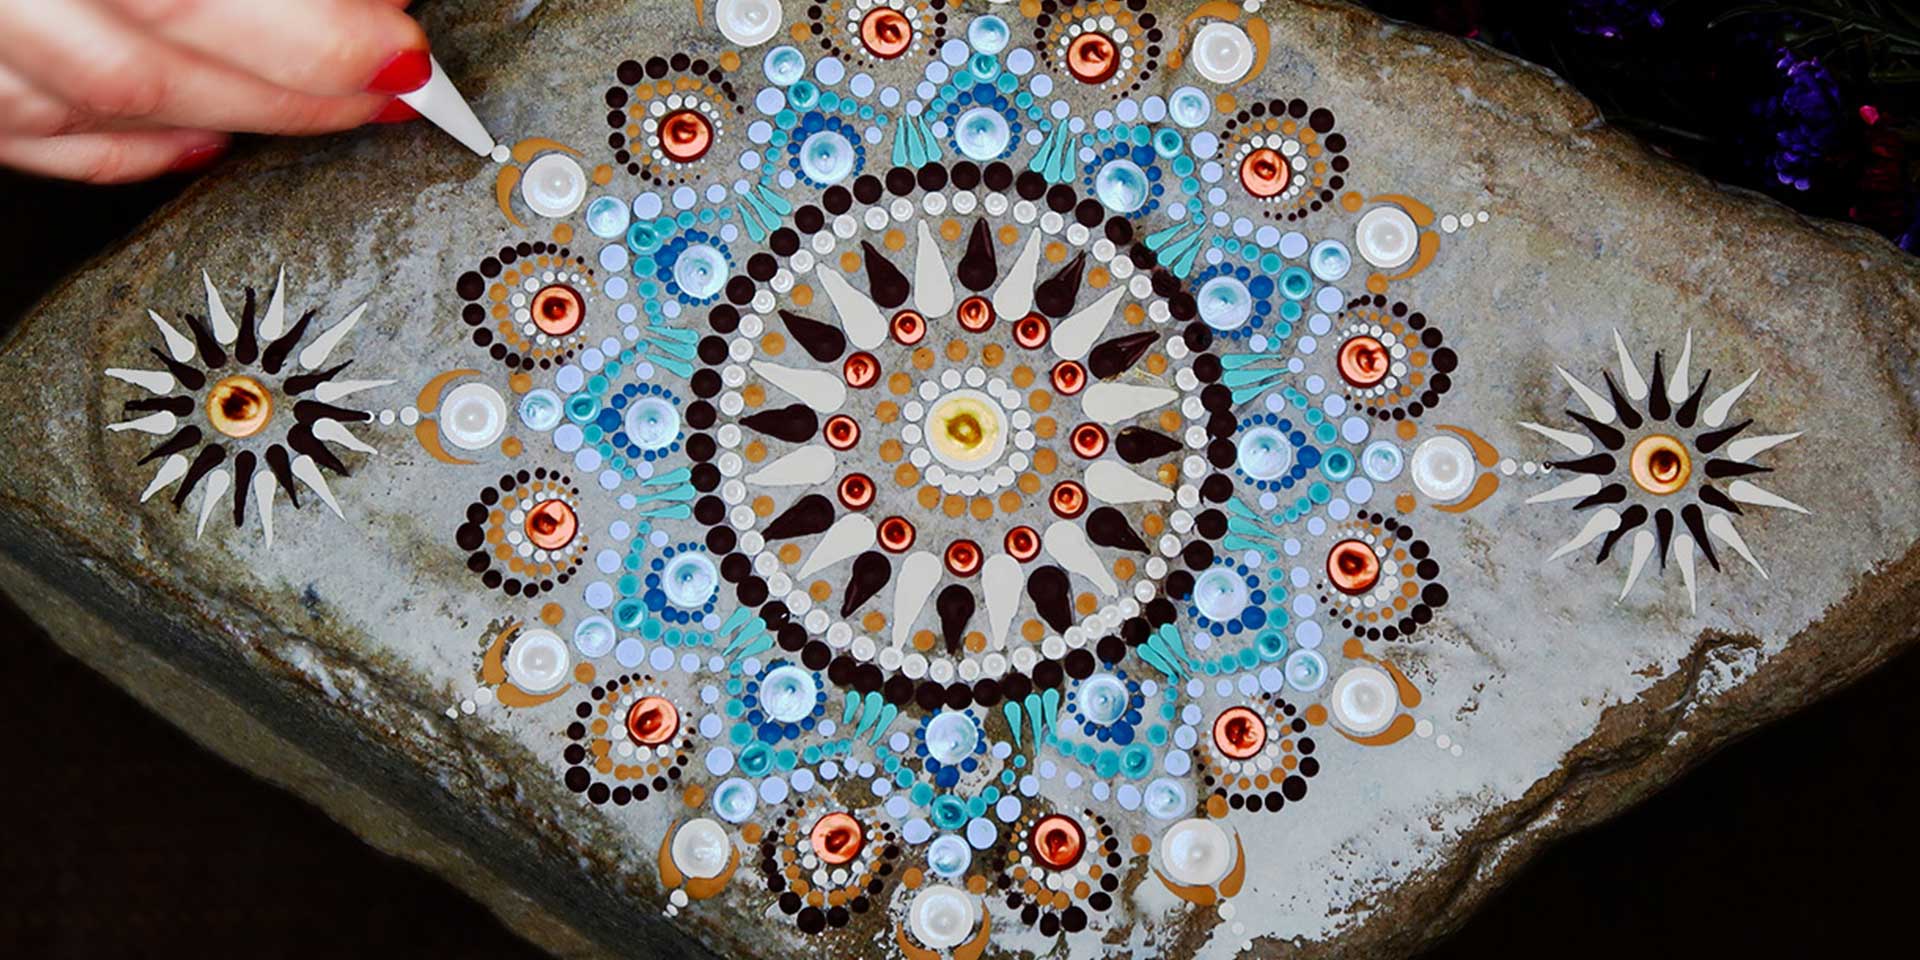 How to Mandala Pattern "Desert Wilderness" Brown & Blue Mandala Rock Dot Painting Time Lapse w Music